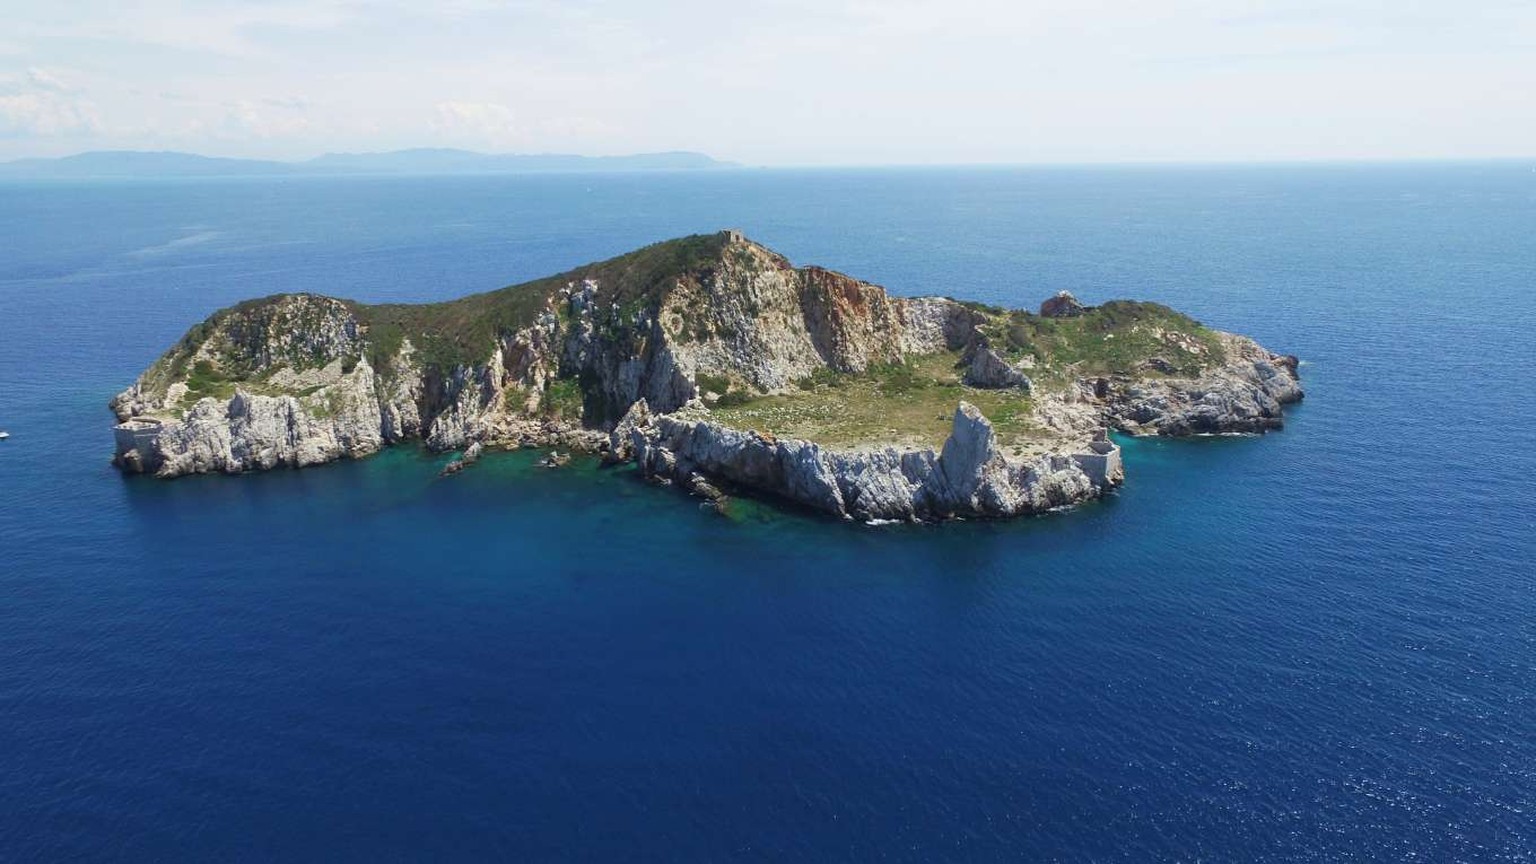 isolotto cerboli tyrrhenische meer italien toskana kaufen reisen https://www.privateislandsonline.com/europe/italy/cerboli-island